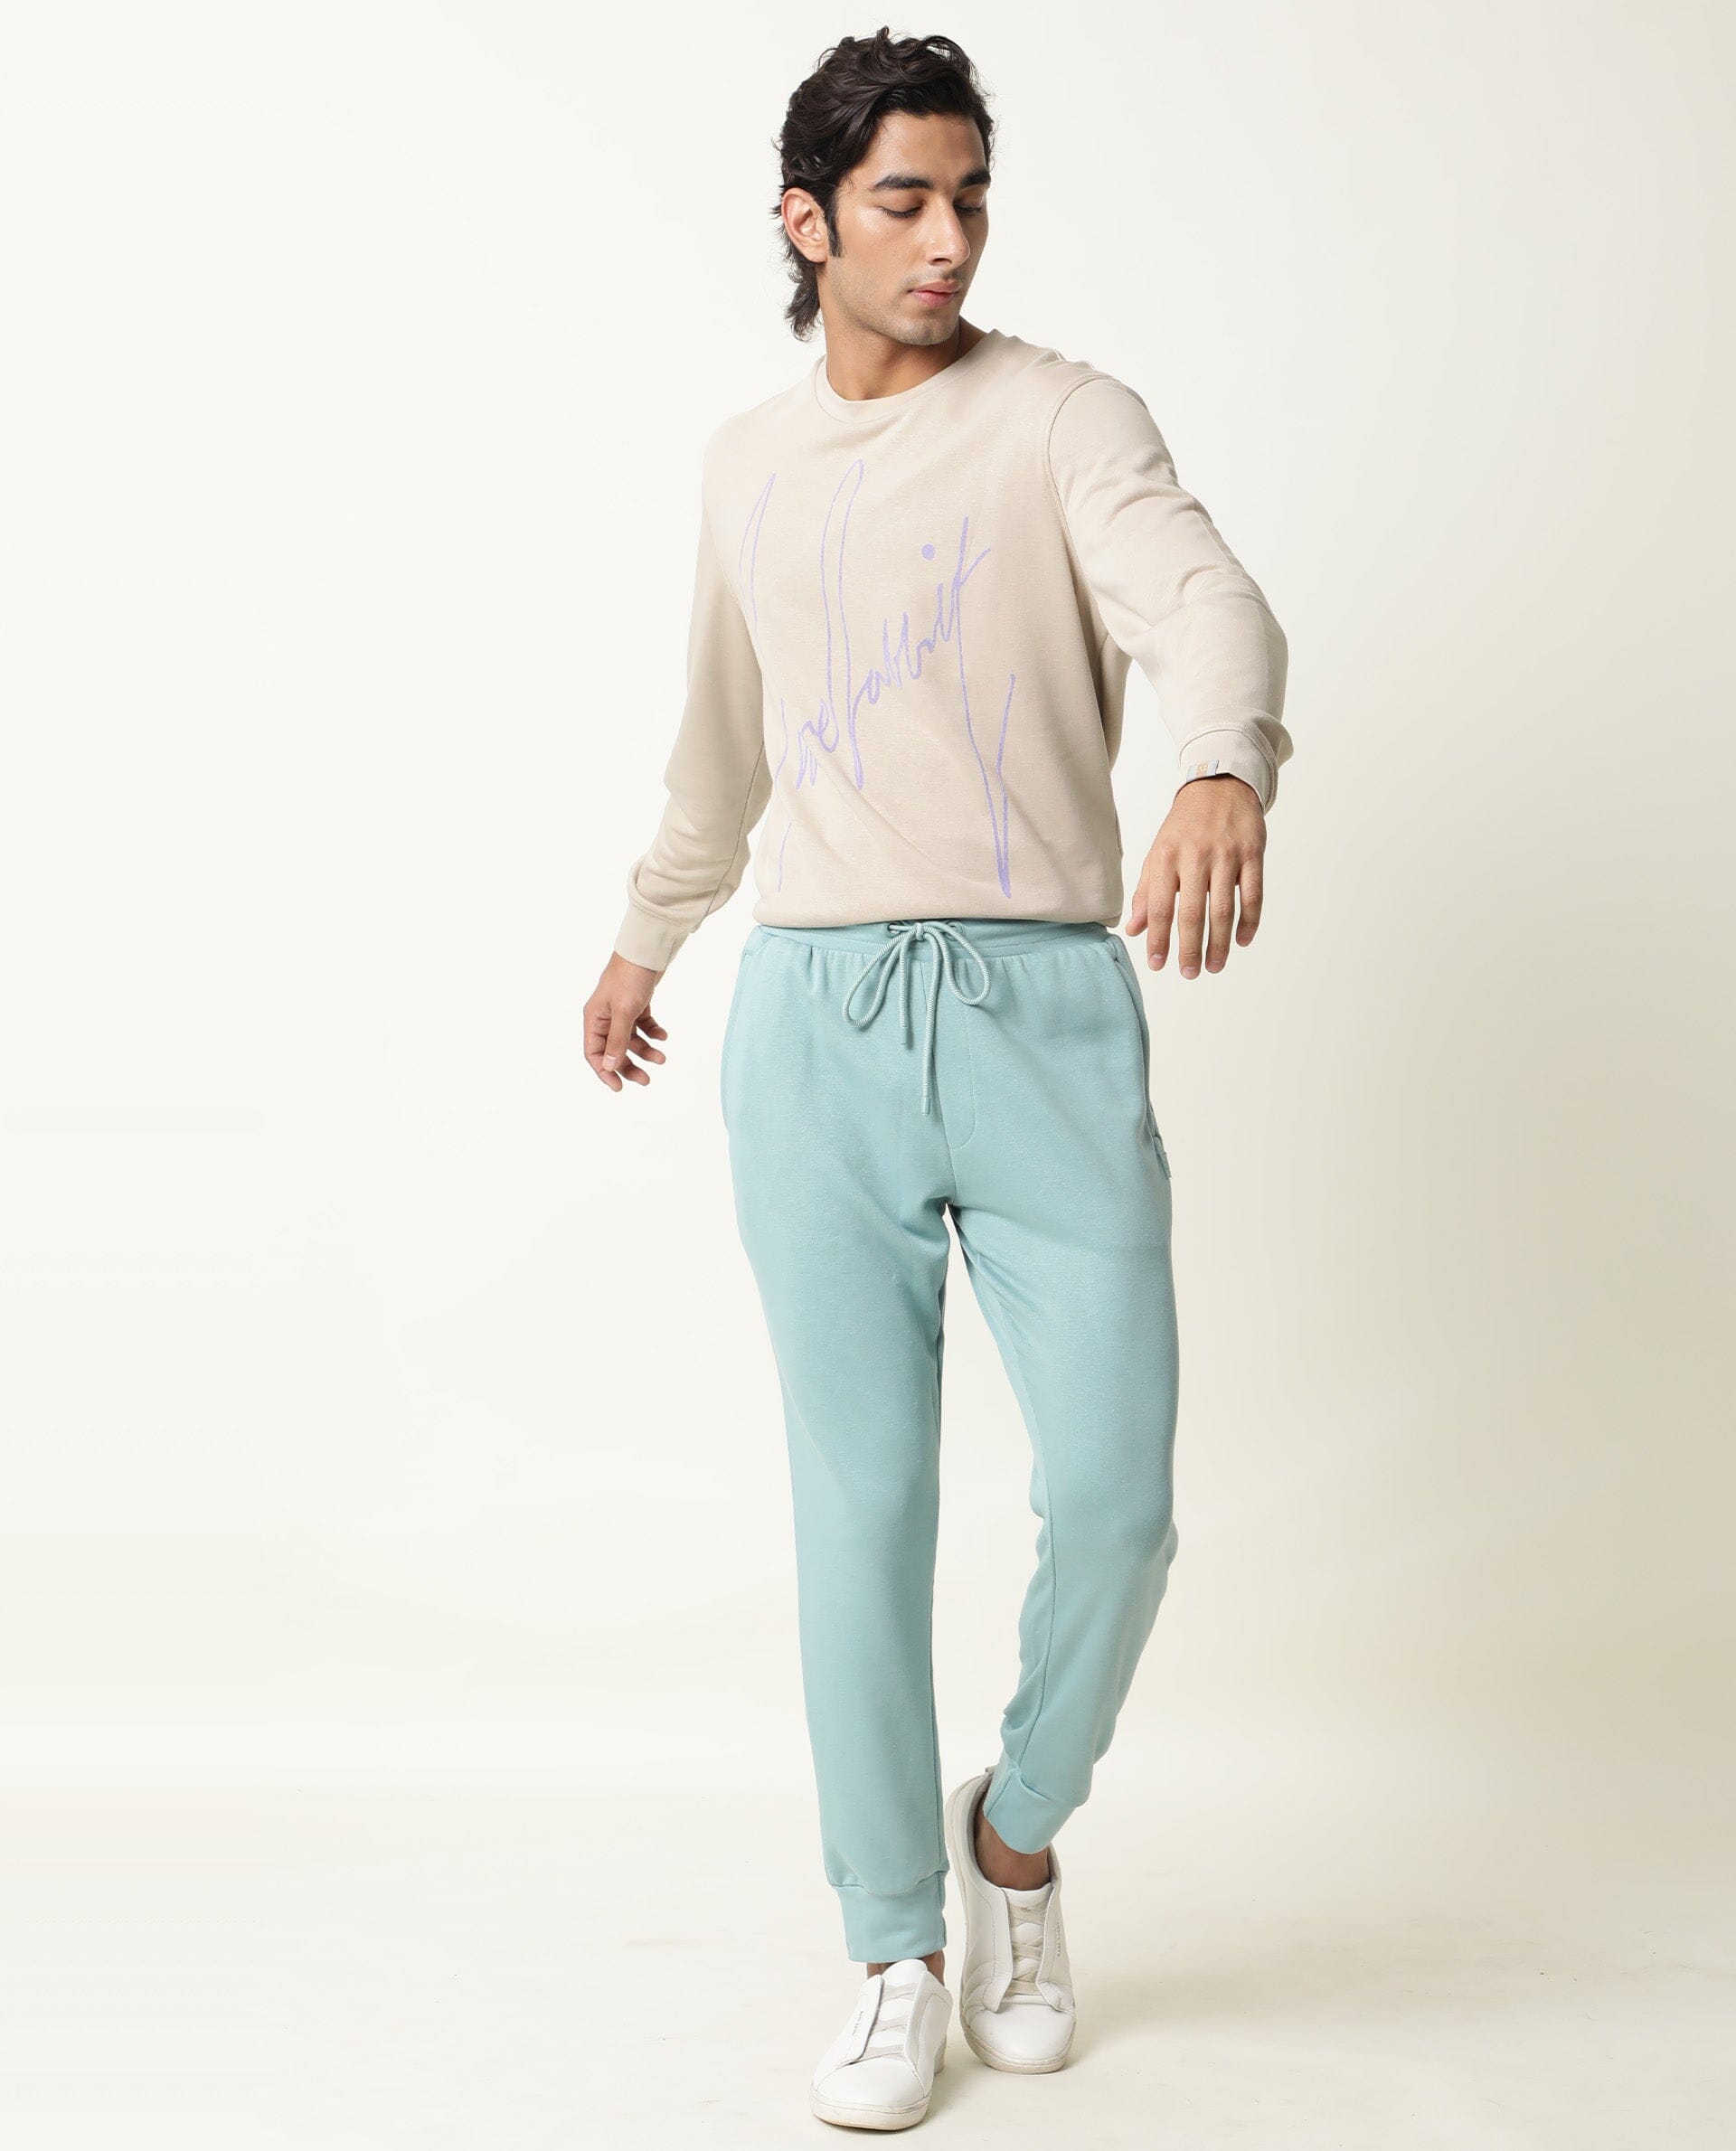 Buy Navy Blue Track Pants for Men by Urban Buccachi Online  Ajiocom